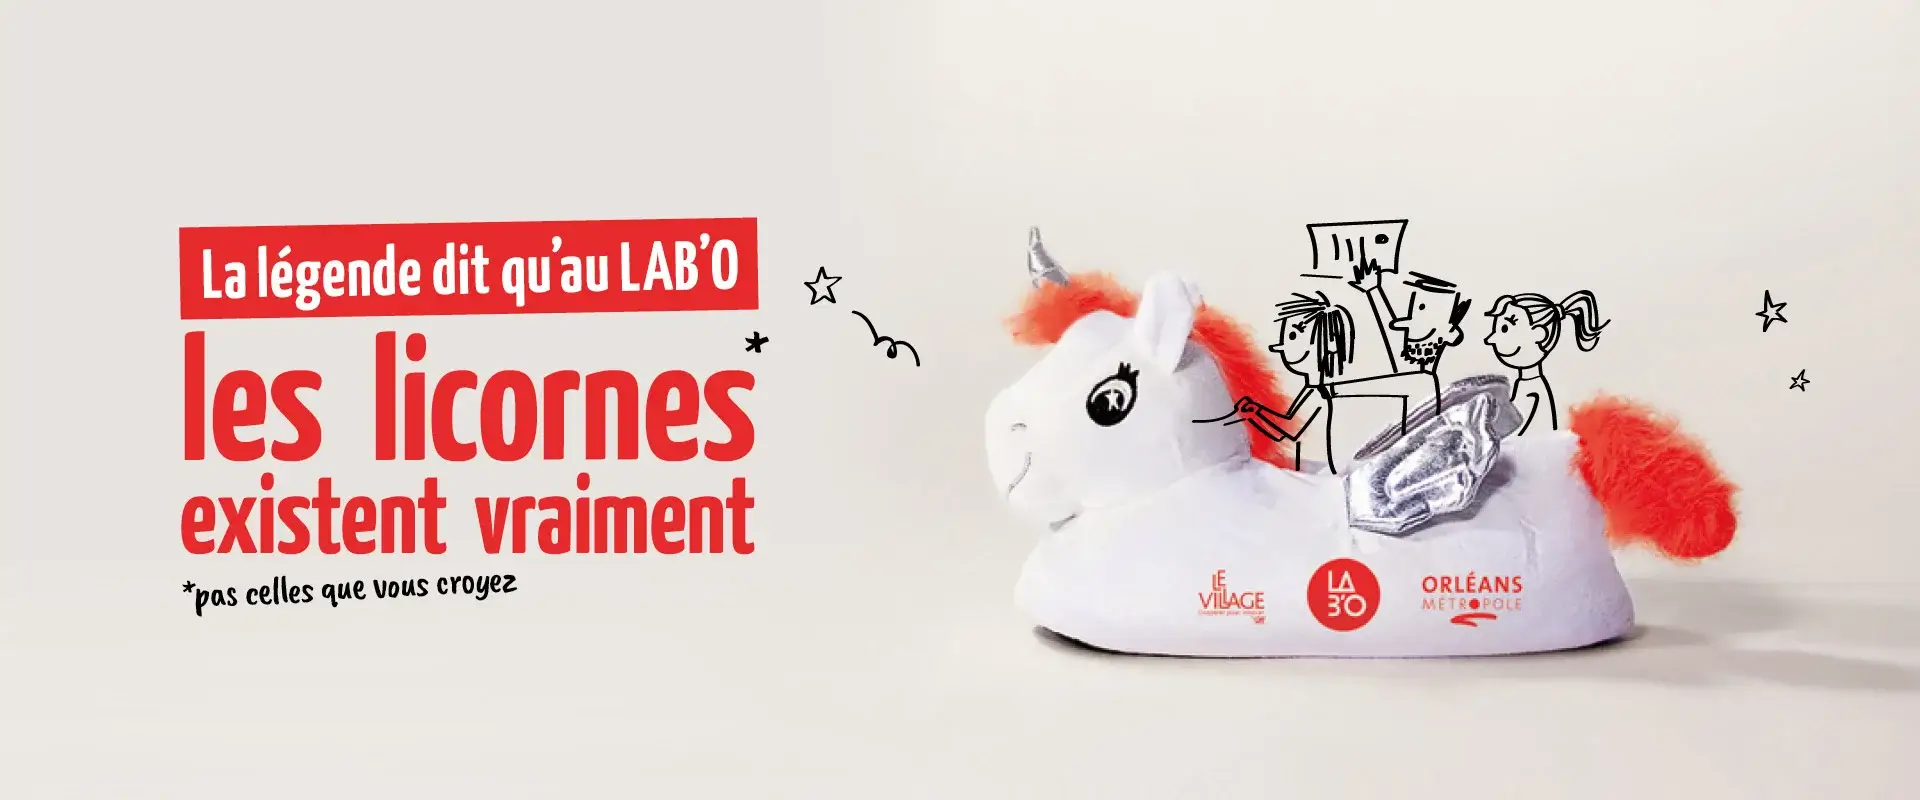 campagne-labo-orleans-incubateur-startup-journee-portes-ouvertes-agence-publicite-buzznative-communication